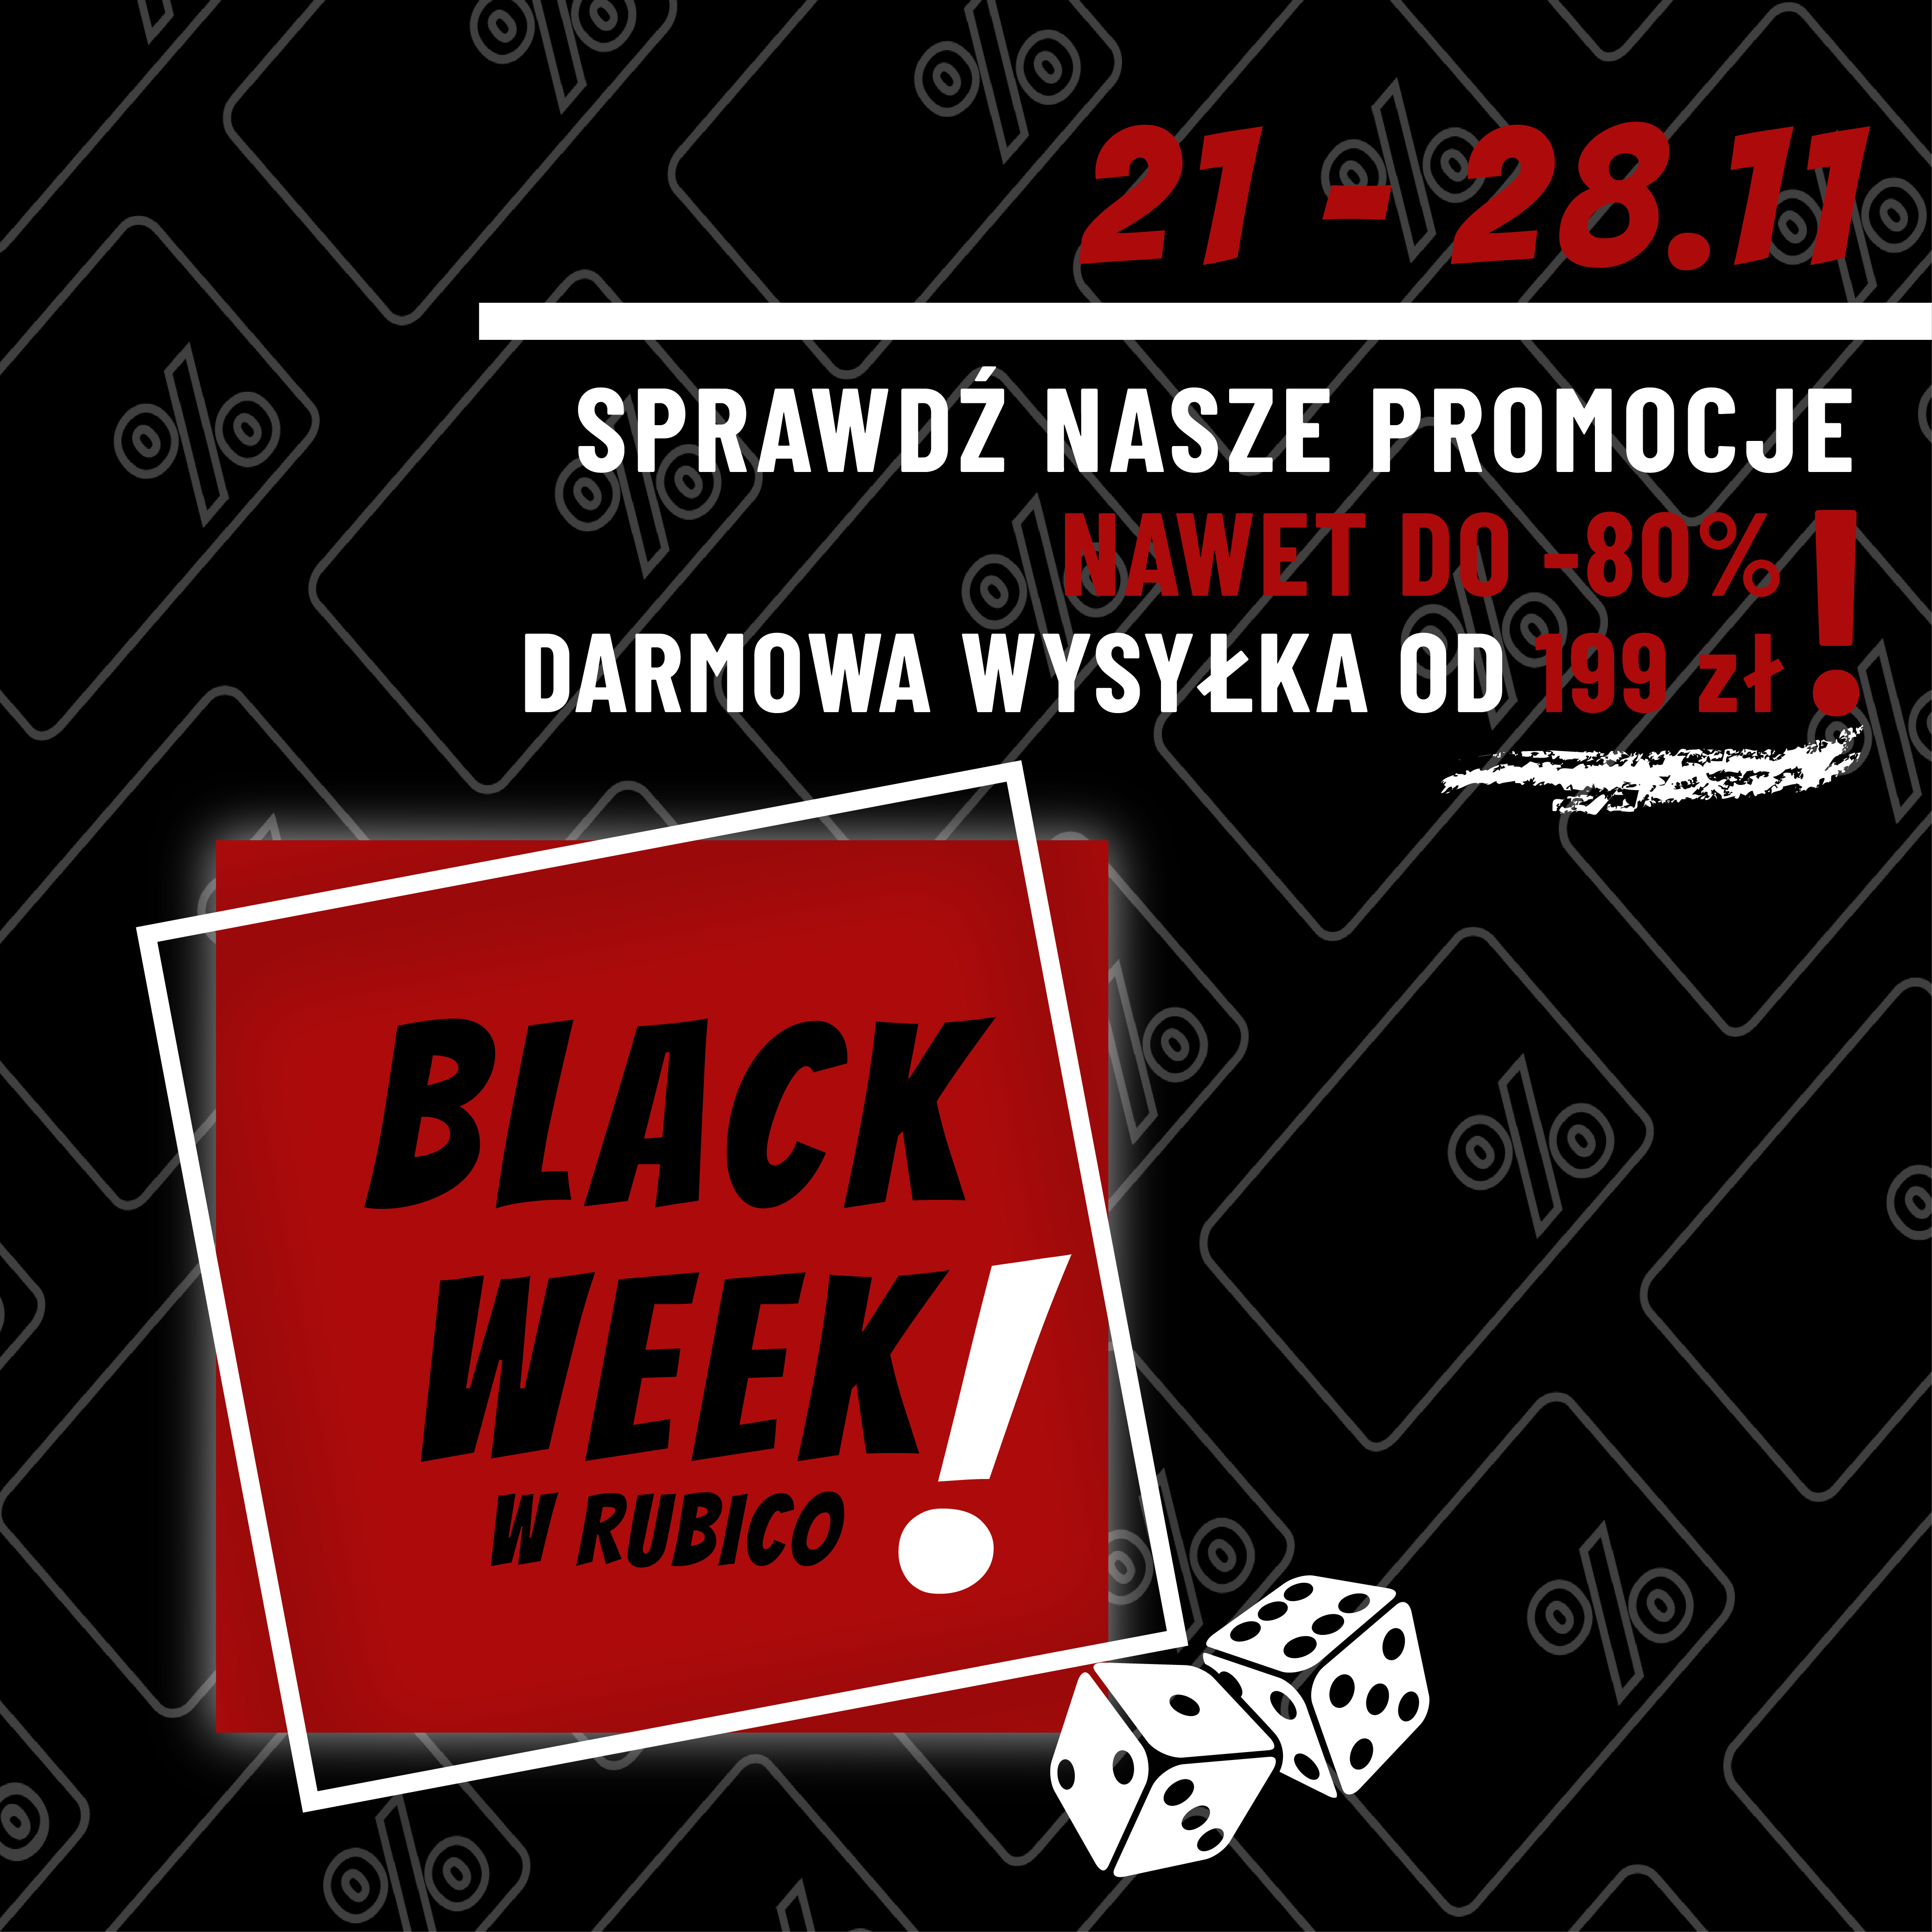 BLACK WEEK W RUBICO!